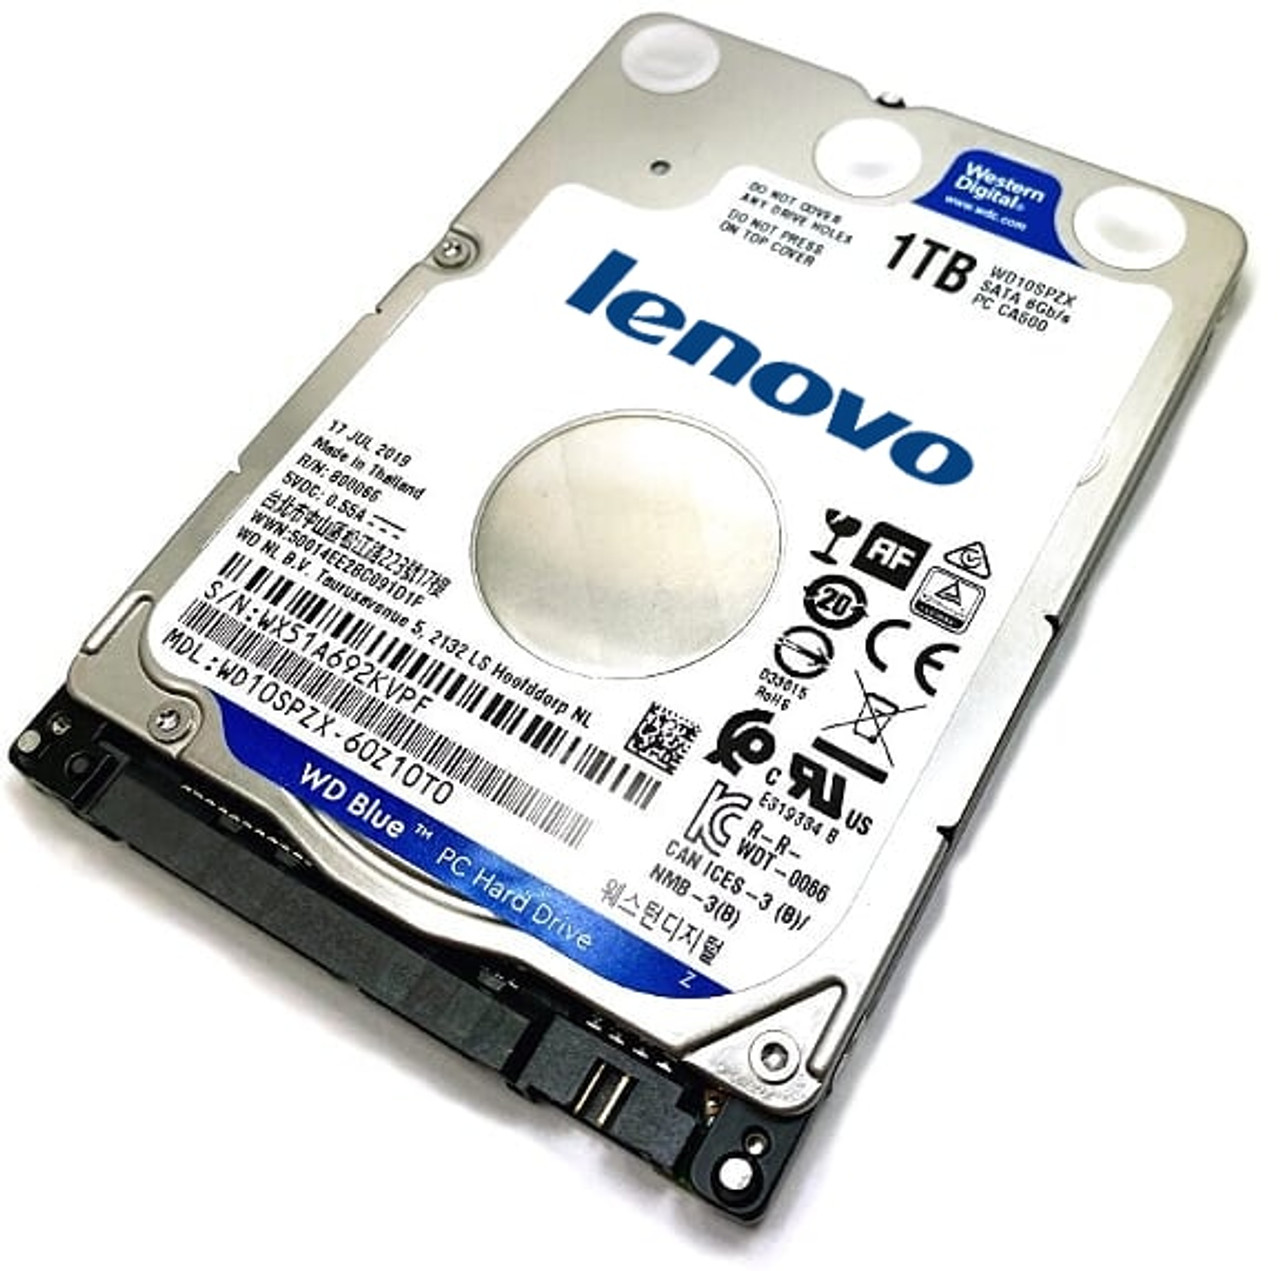 Lenovo T430 Laptop Hard Drive Replacement - LaptopHDS.com